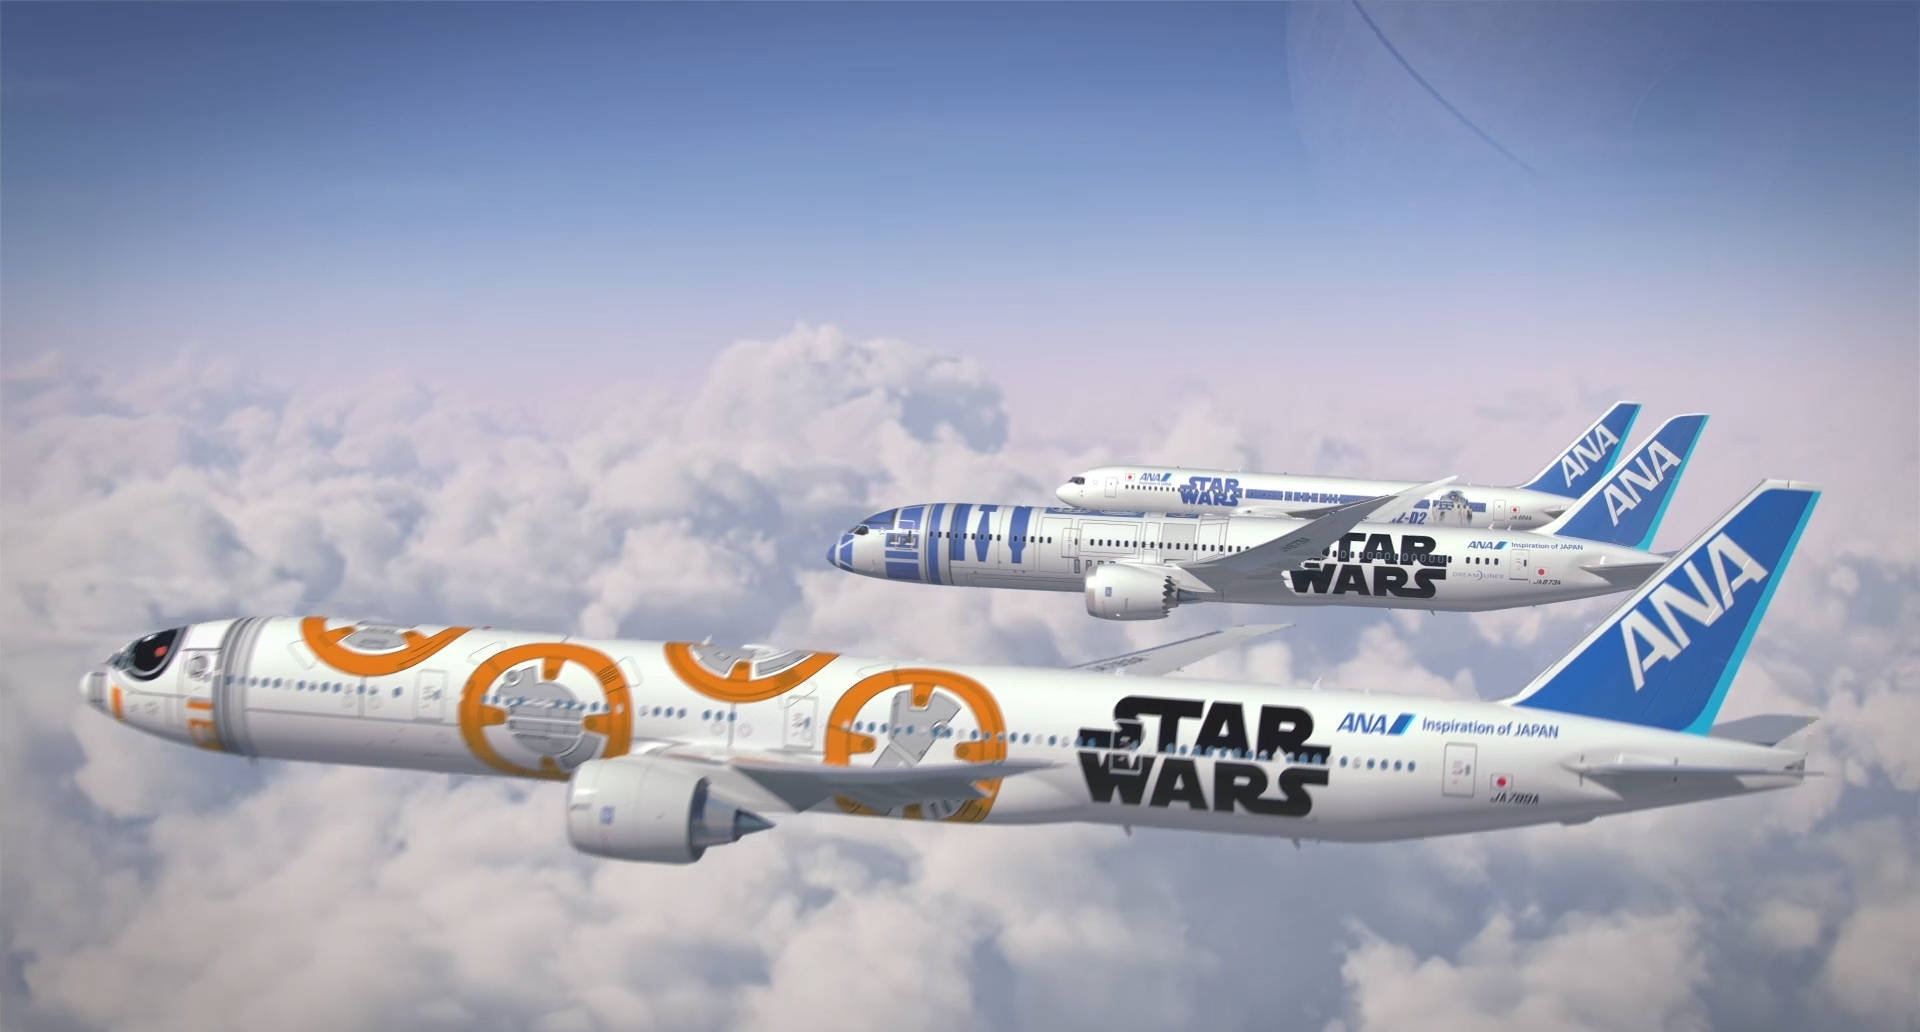 Three Star Wars Ana Airplanes